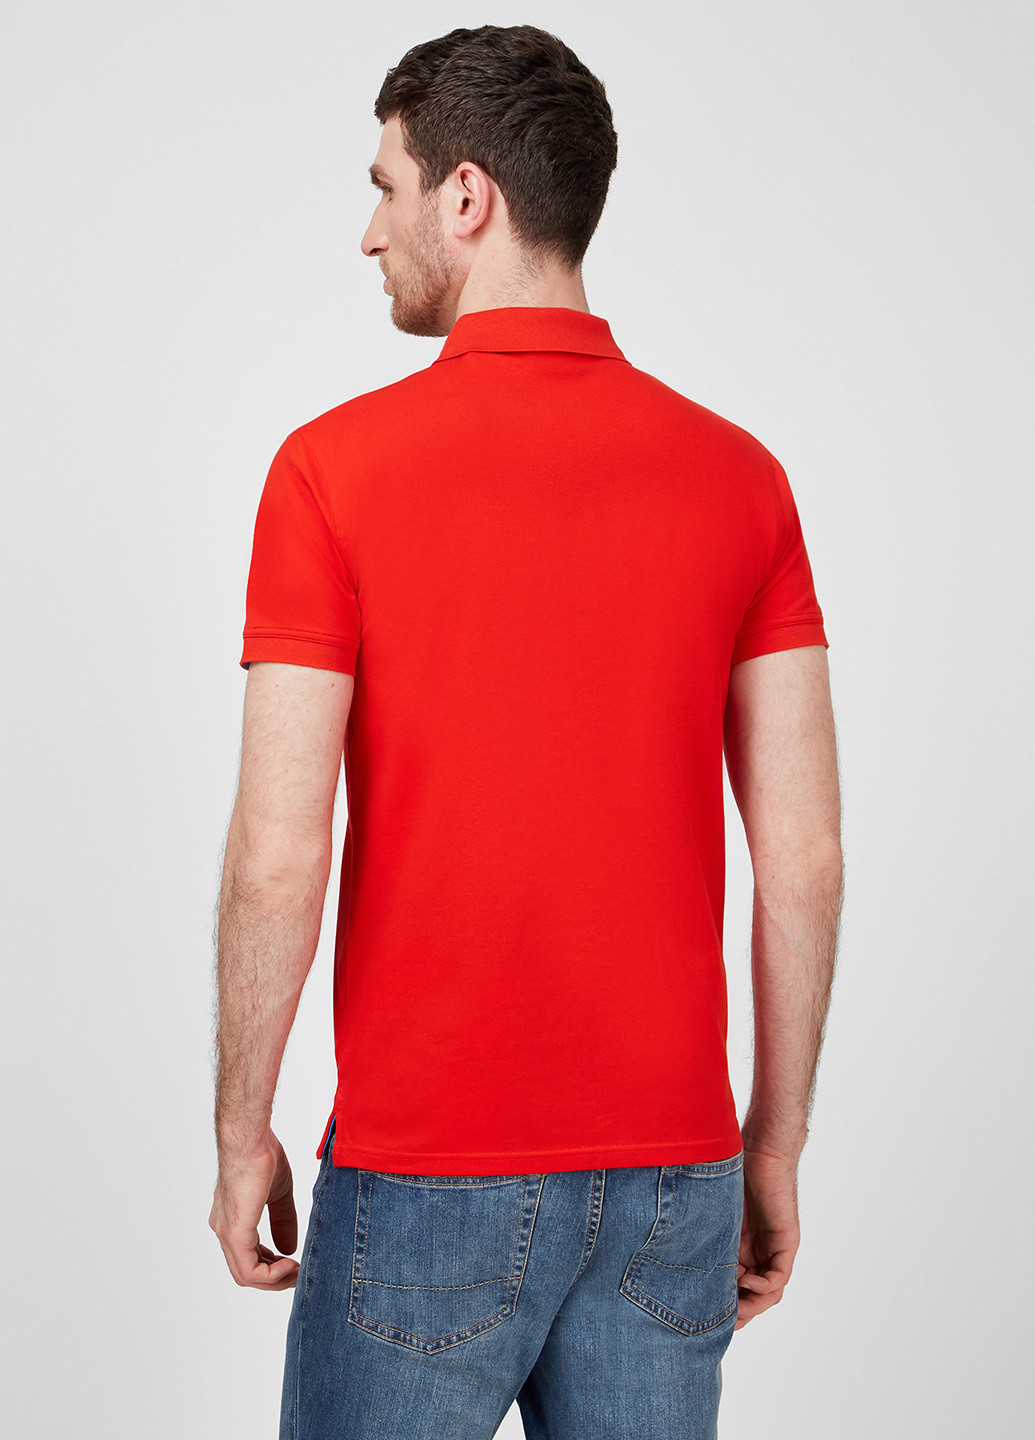 Красная футболка-поло для мужчин Gant однотонная